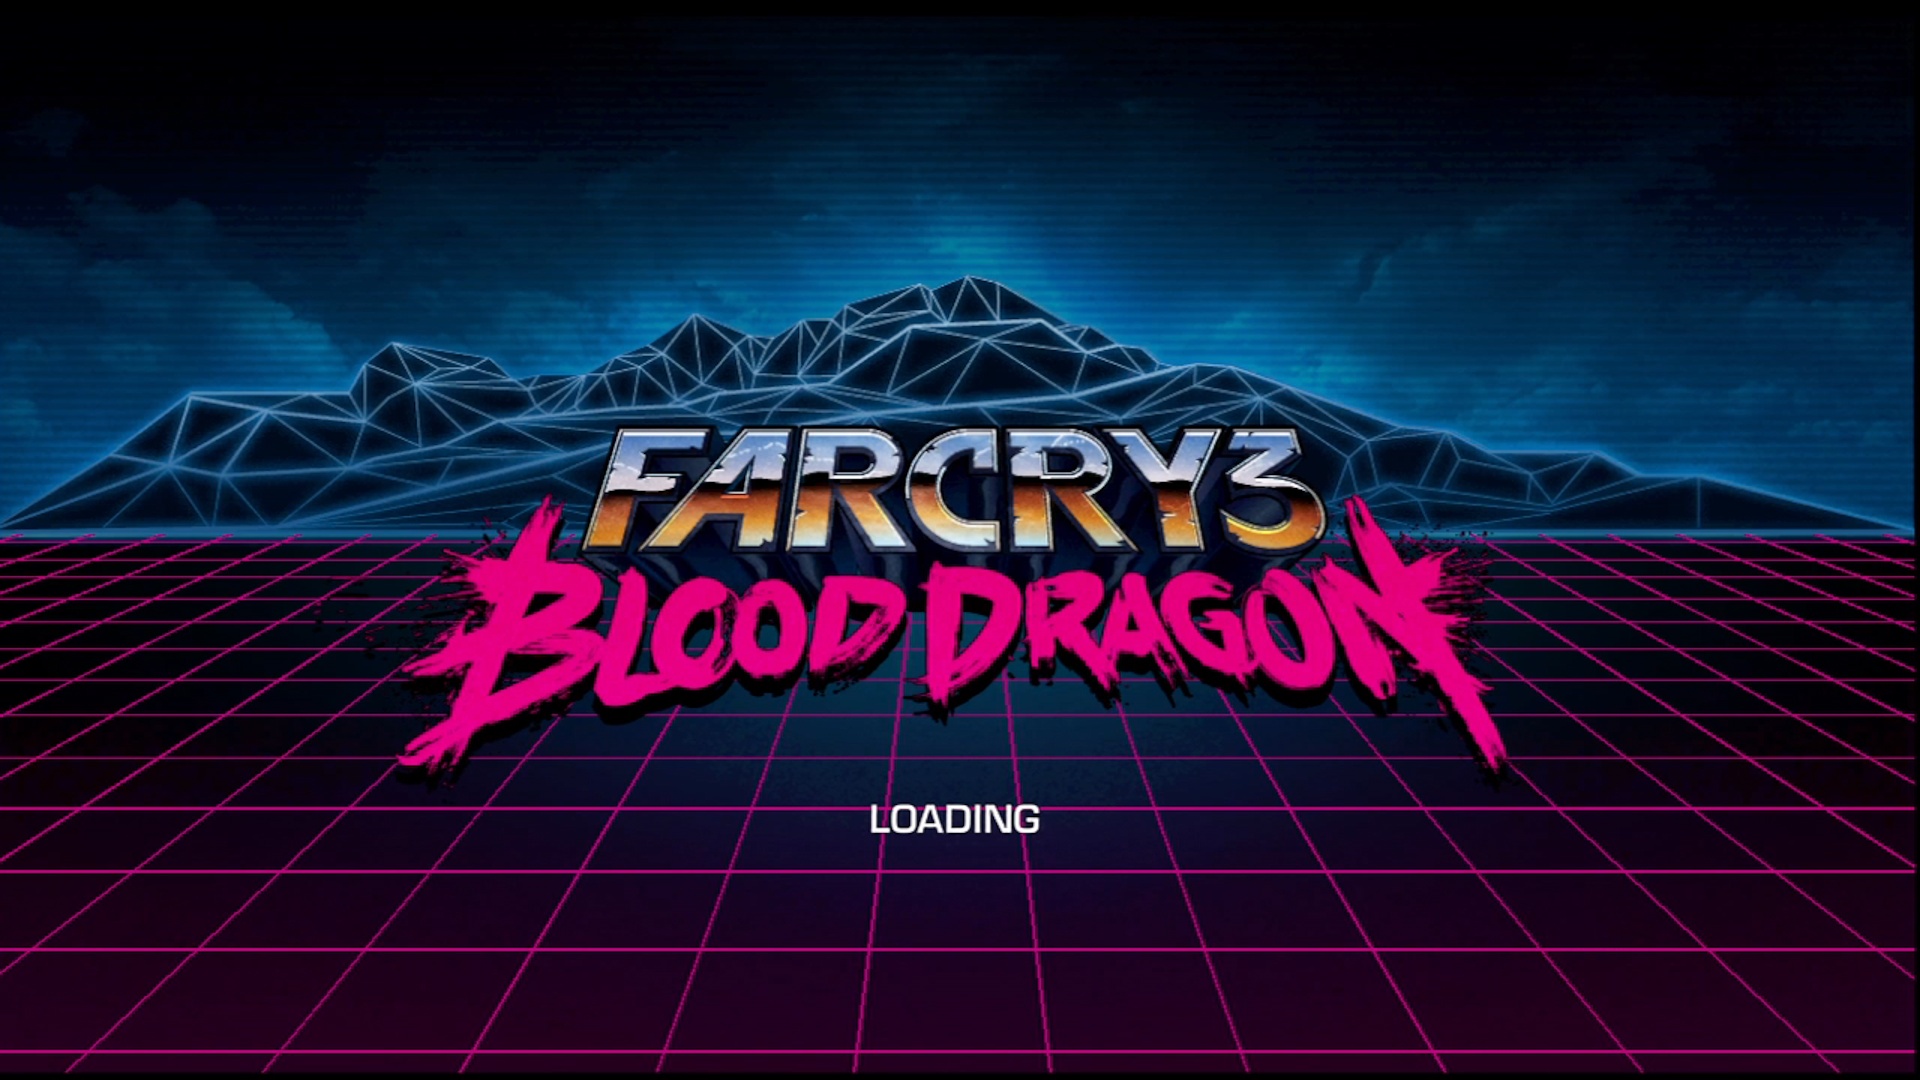 Blood Dragon Background